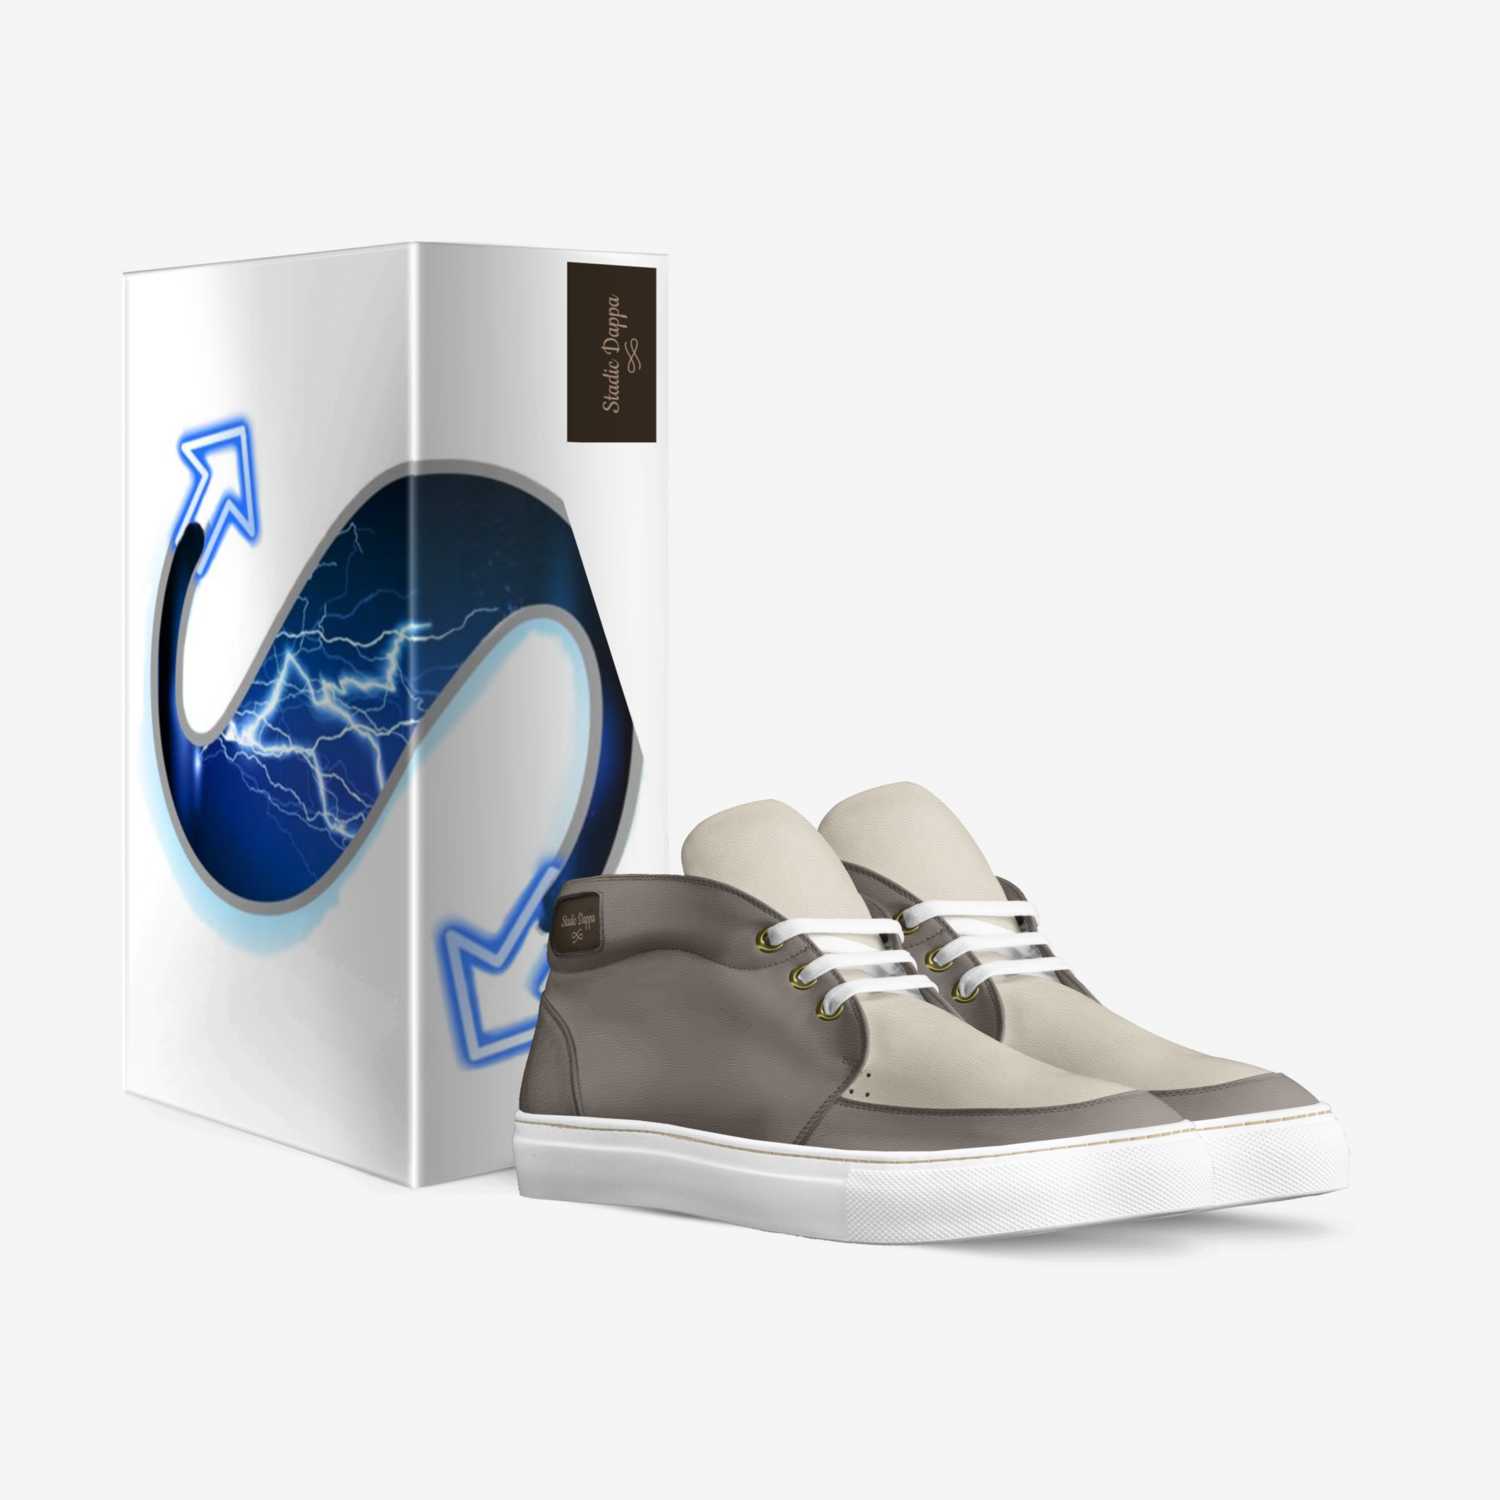 Stadic Dappa custom made in Italy shoes by Khai Petersen | Box view